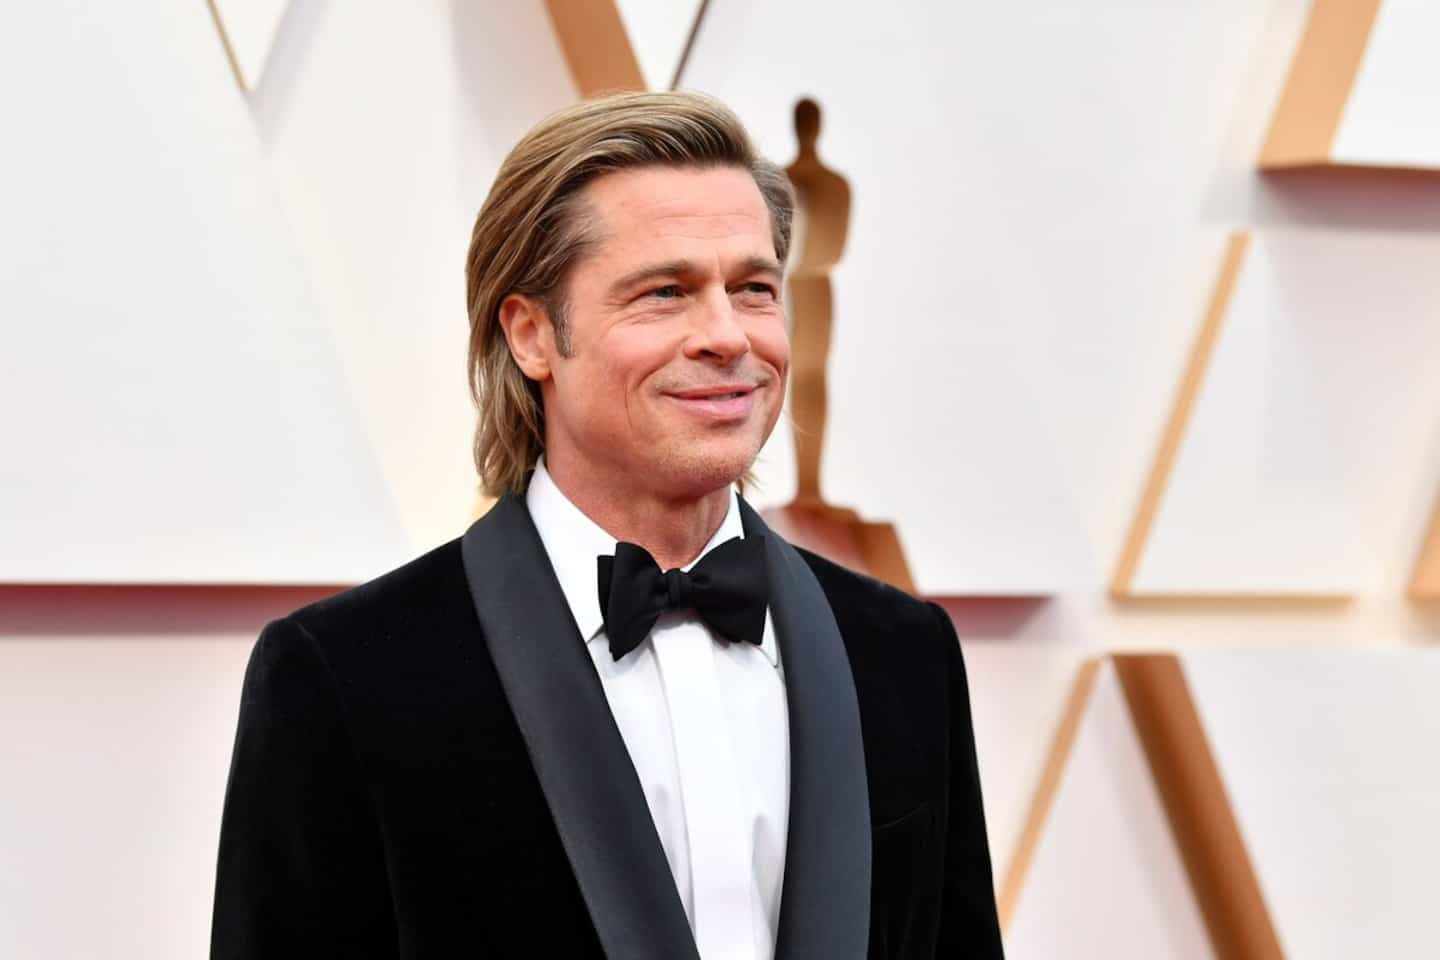 Brad Pitt suffers from prosopagnosia